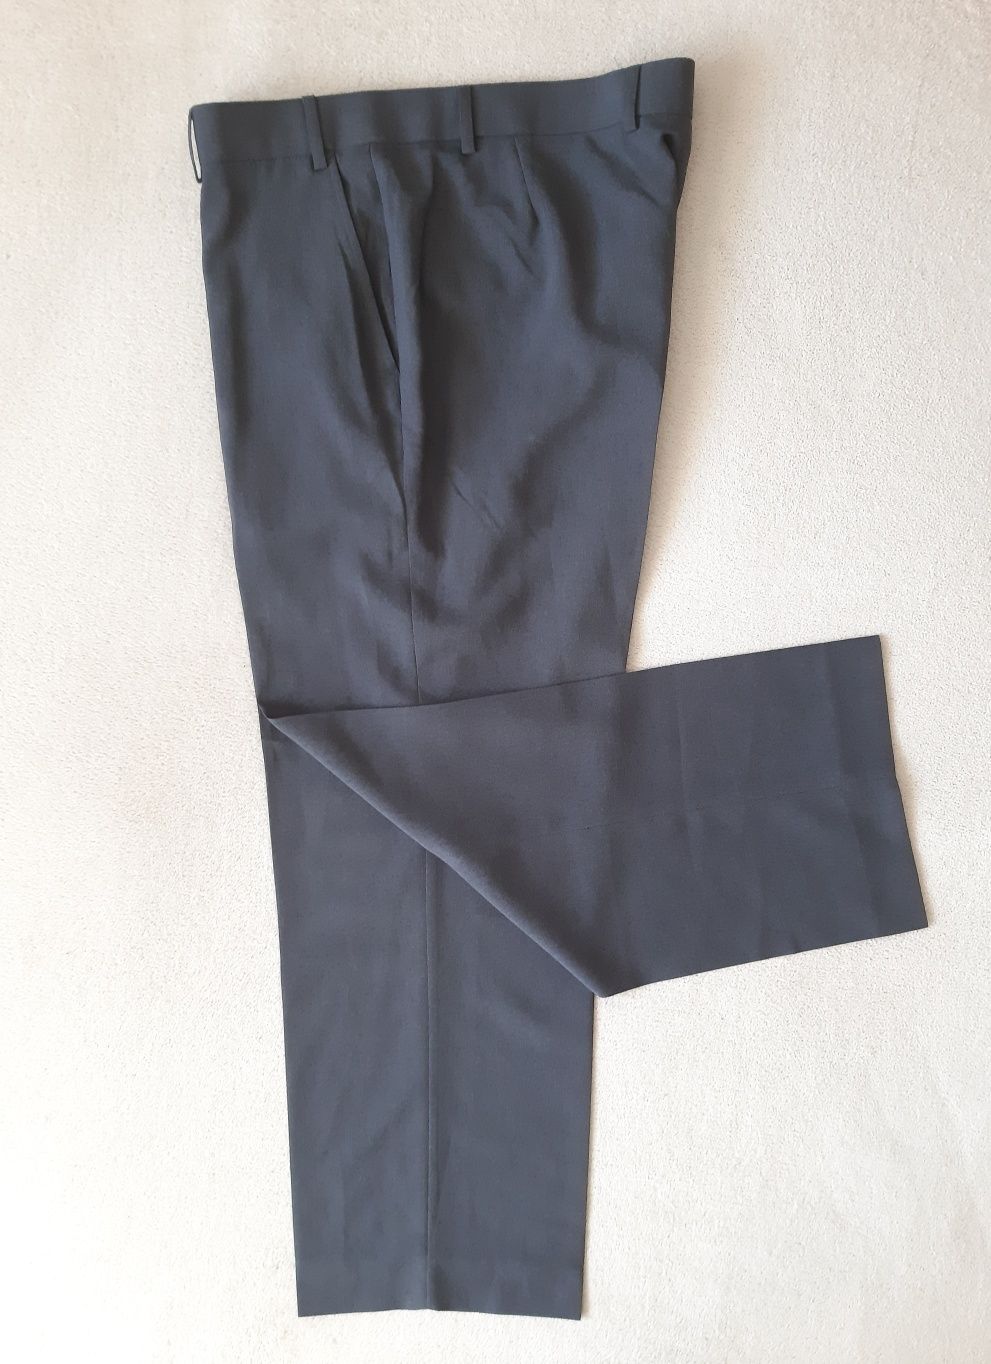 NOWE eleganckie spodnie TU roz. 2XL/3XL styl moda klasyka komfort